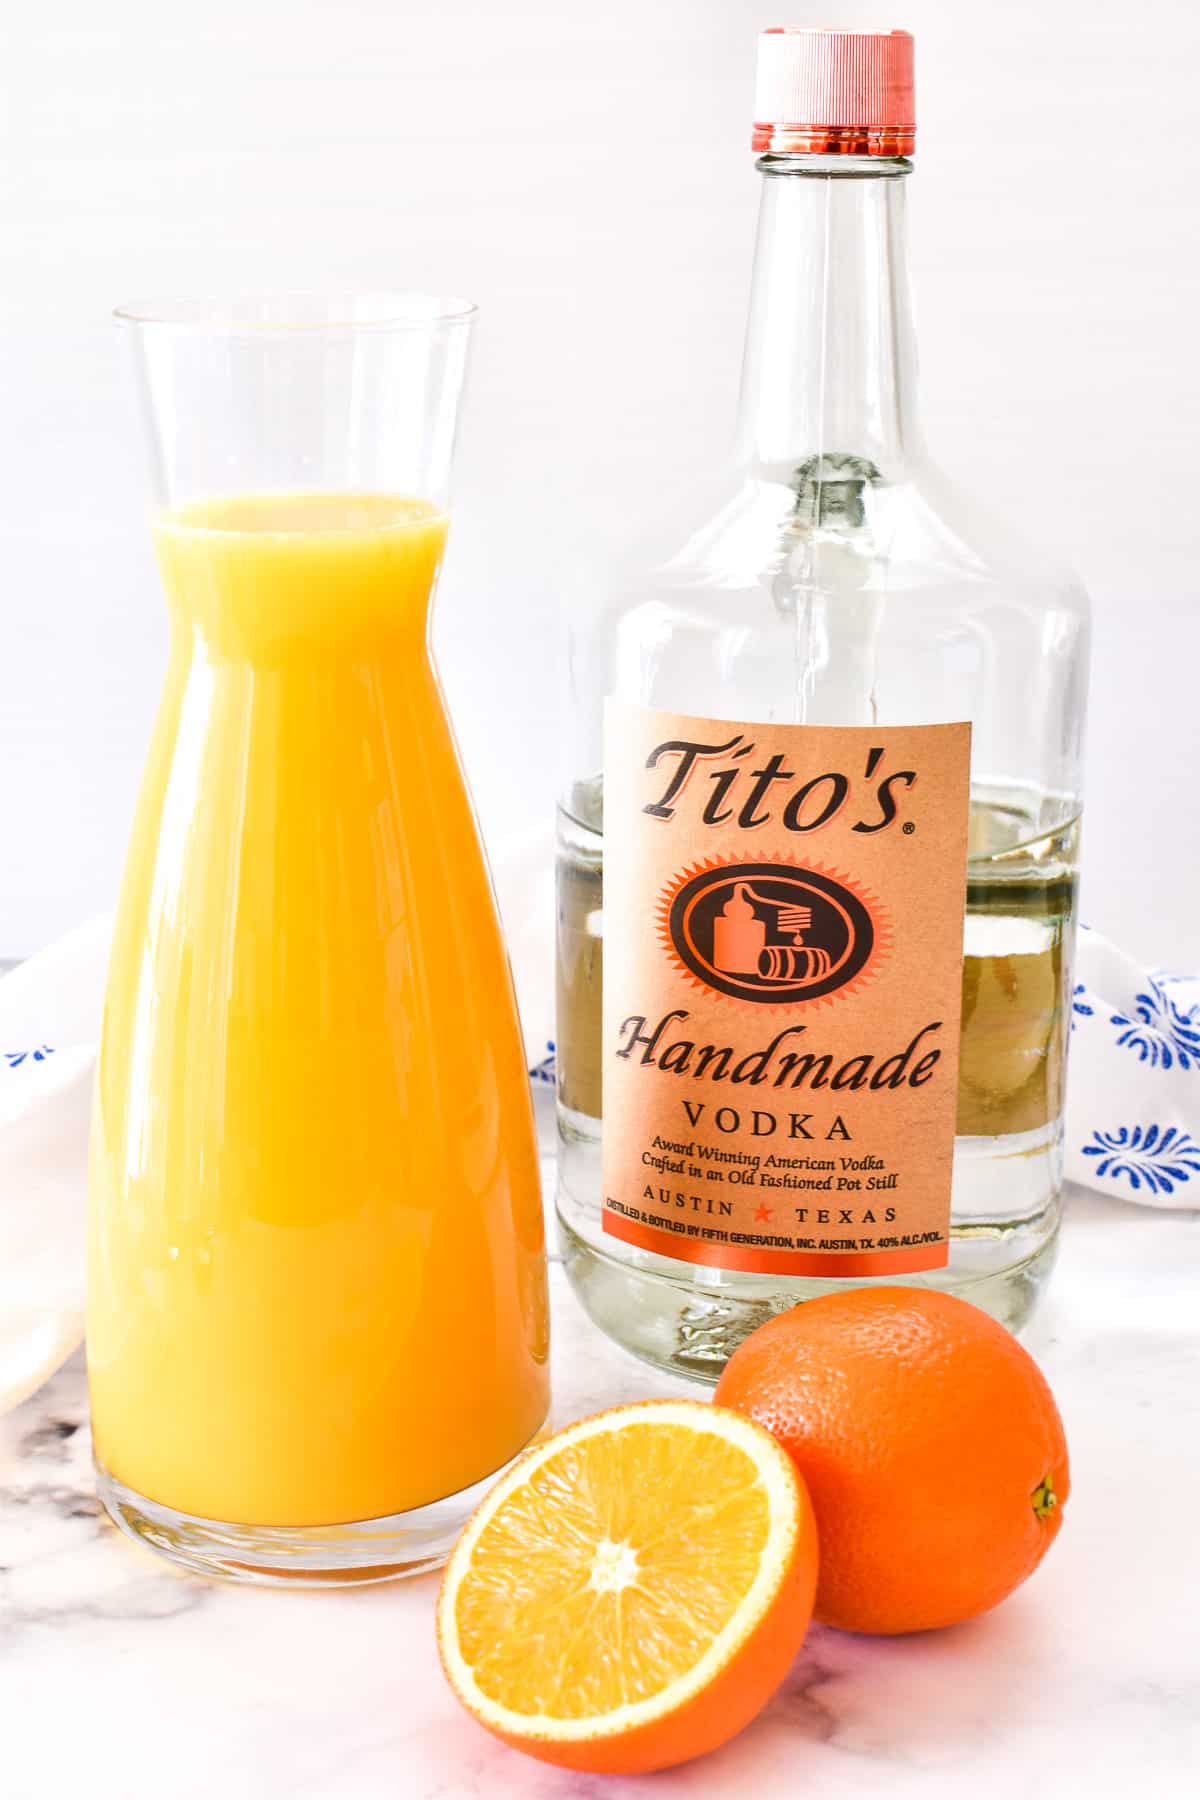 Tito's vodka, orange juice, and fresh oranges